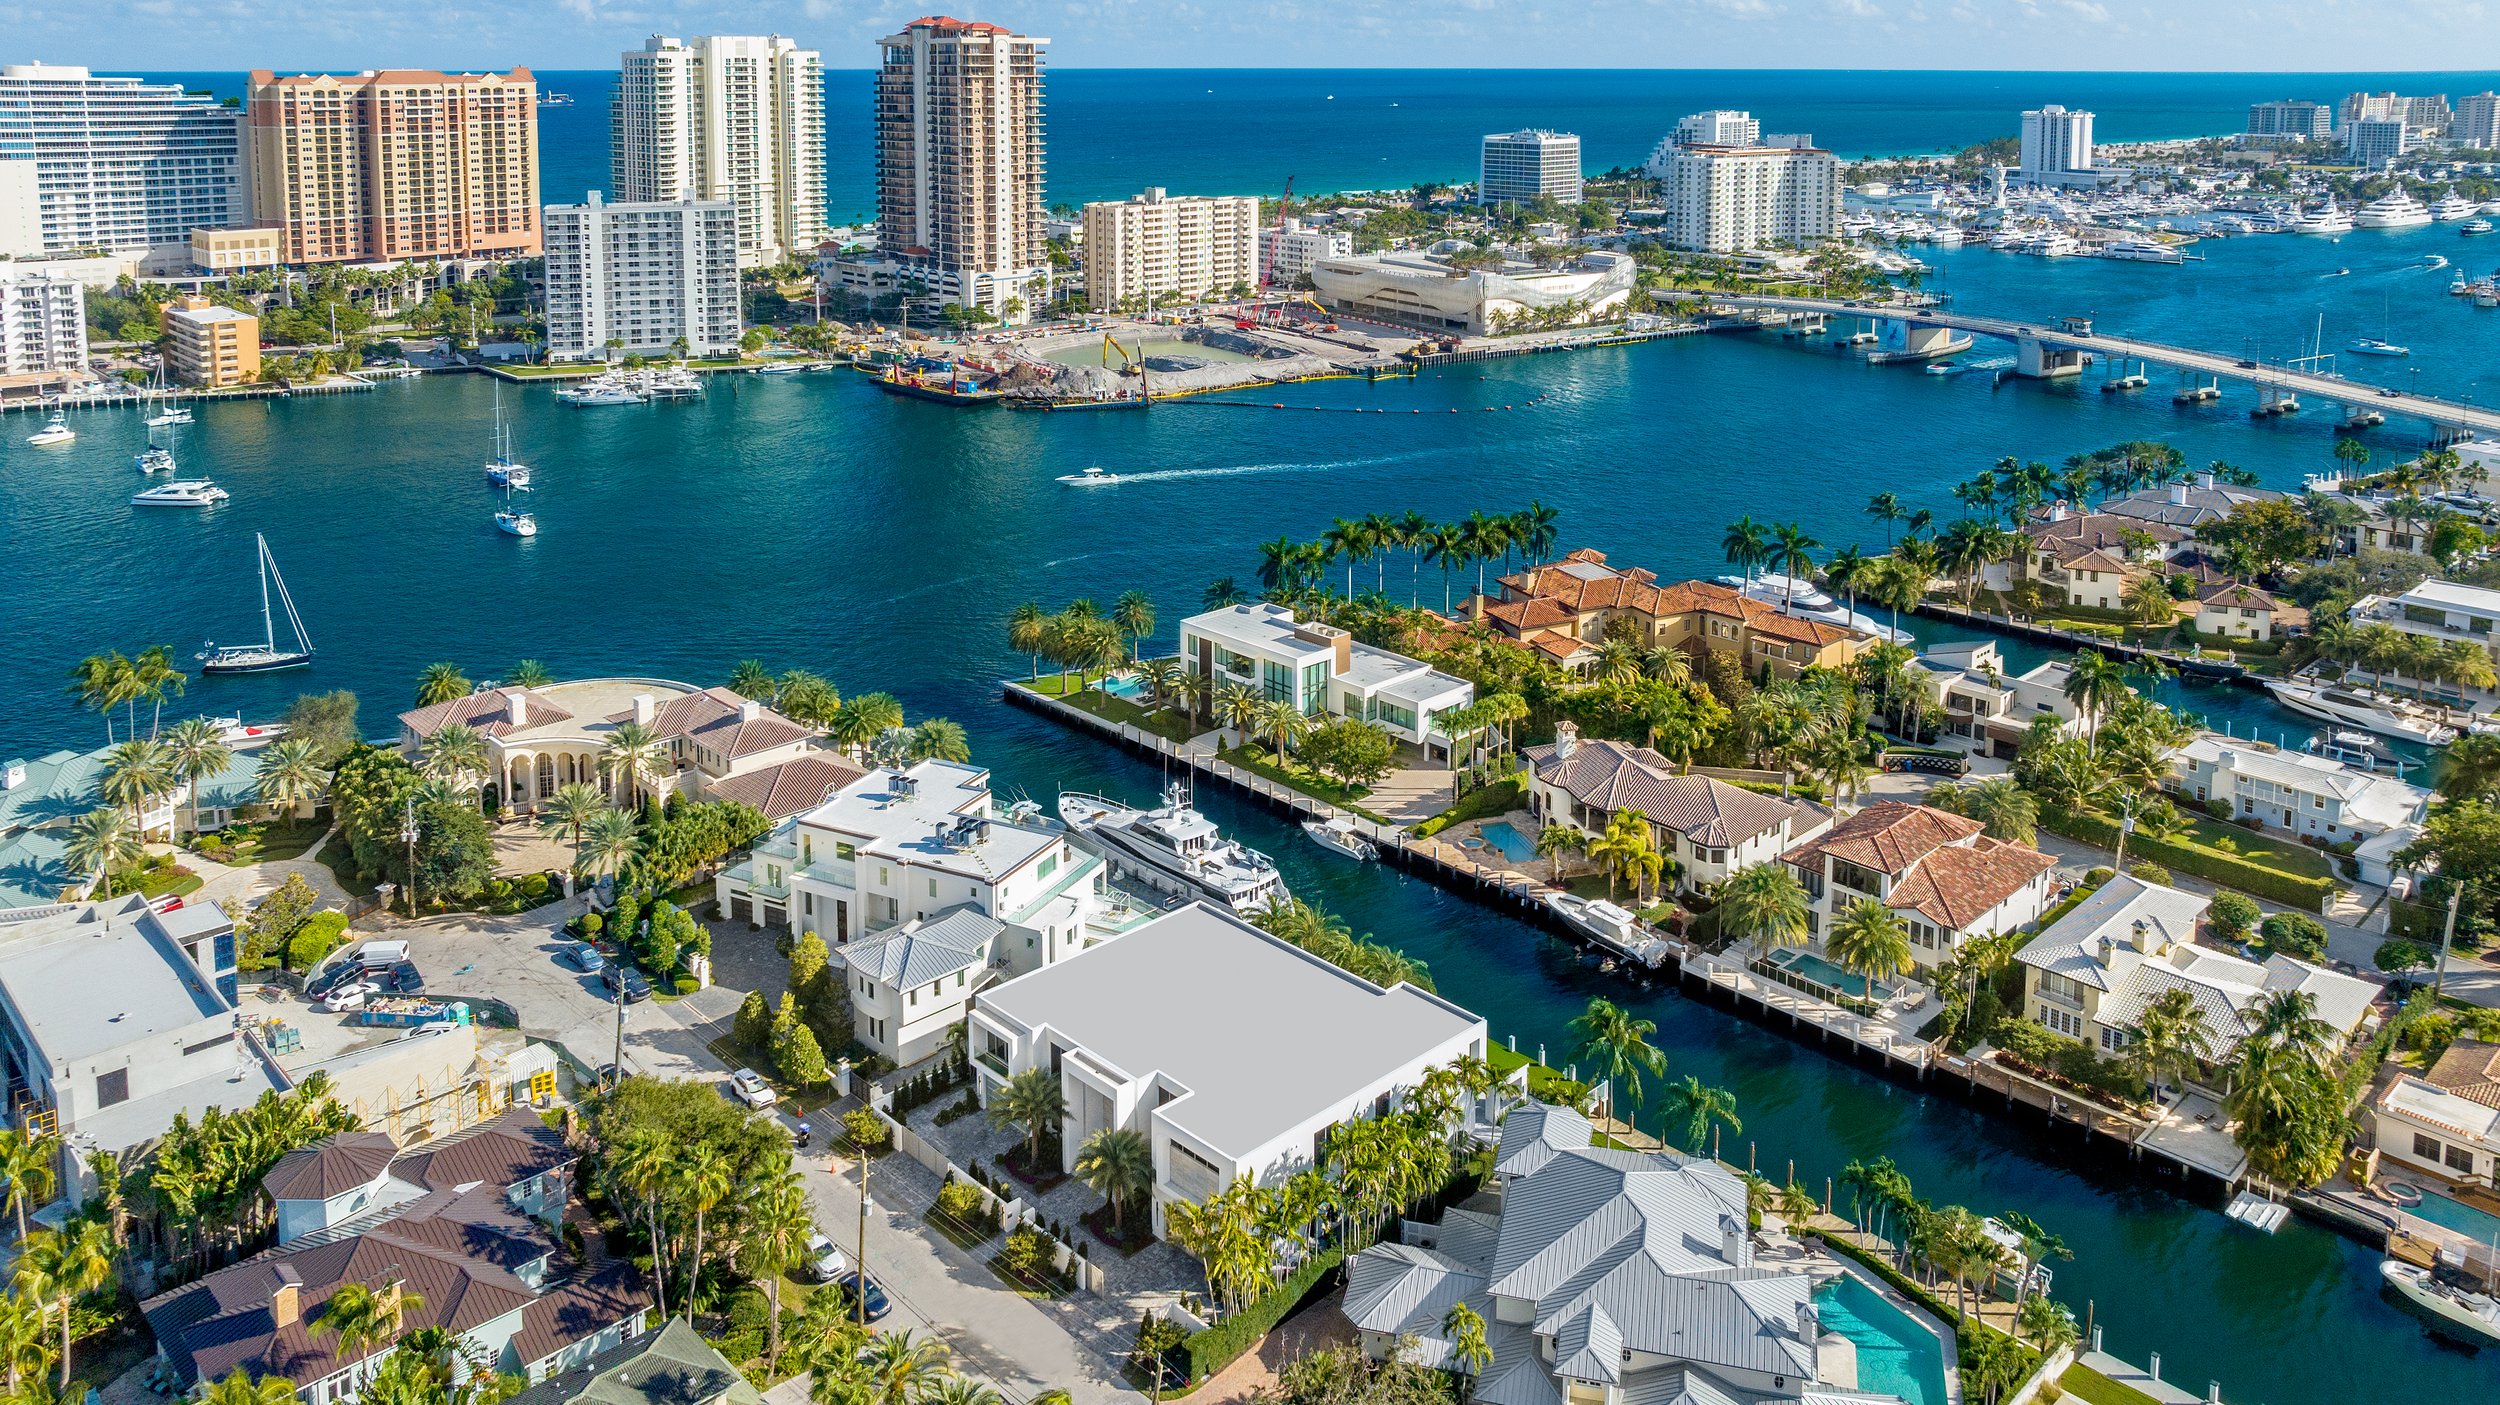 Fort Lauderdale Waterfront Sells For Las Olas Isle Record $14.75 Million 11.jpg